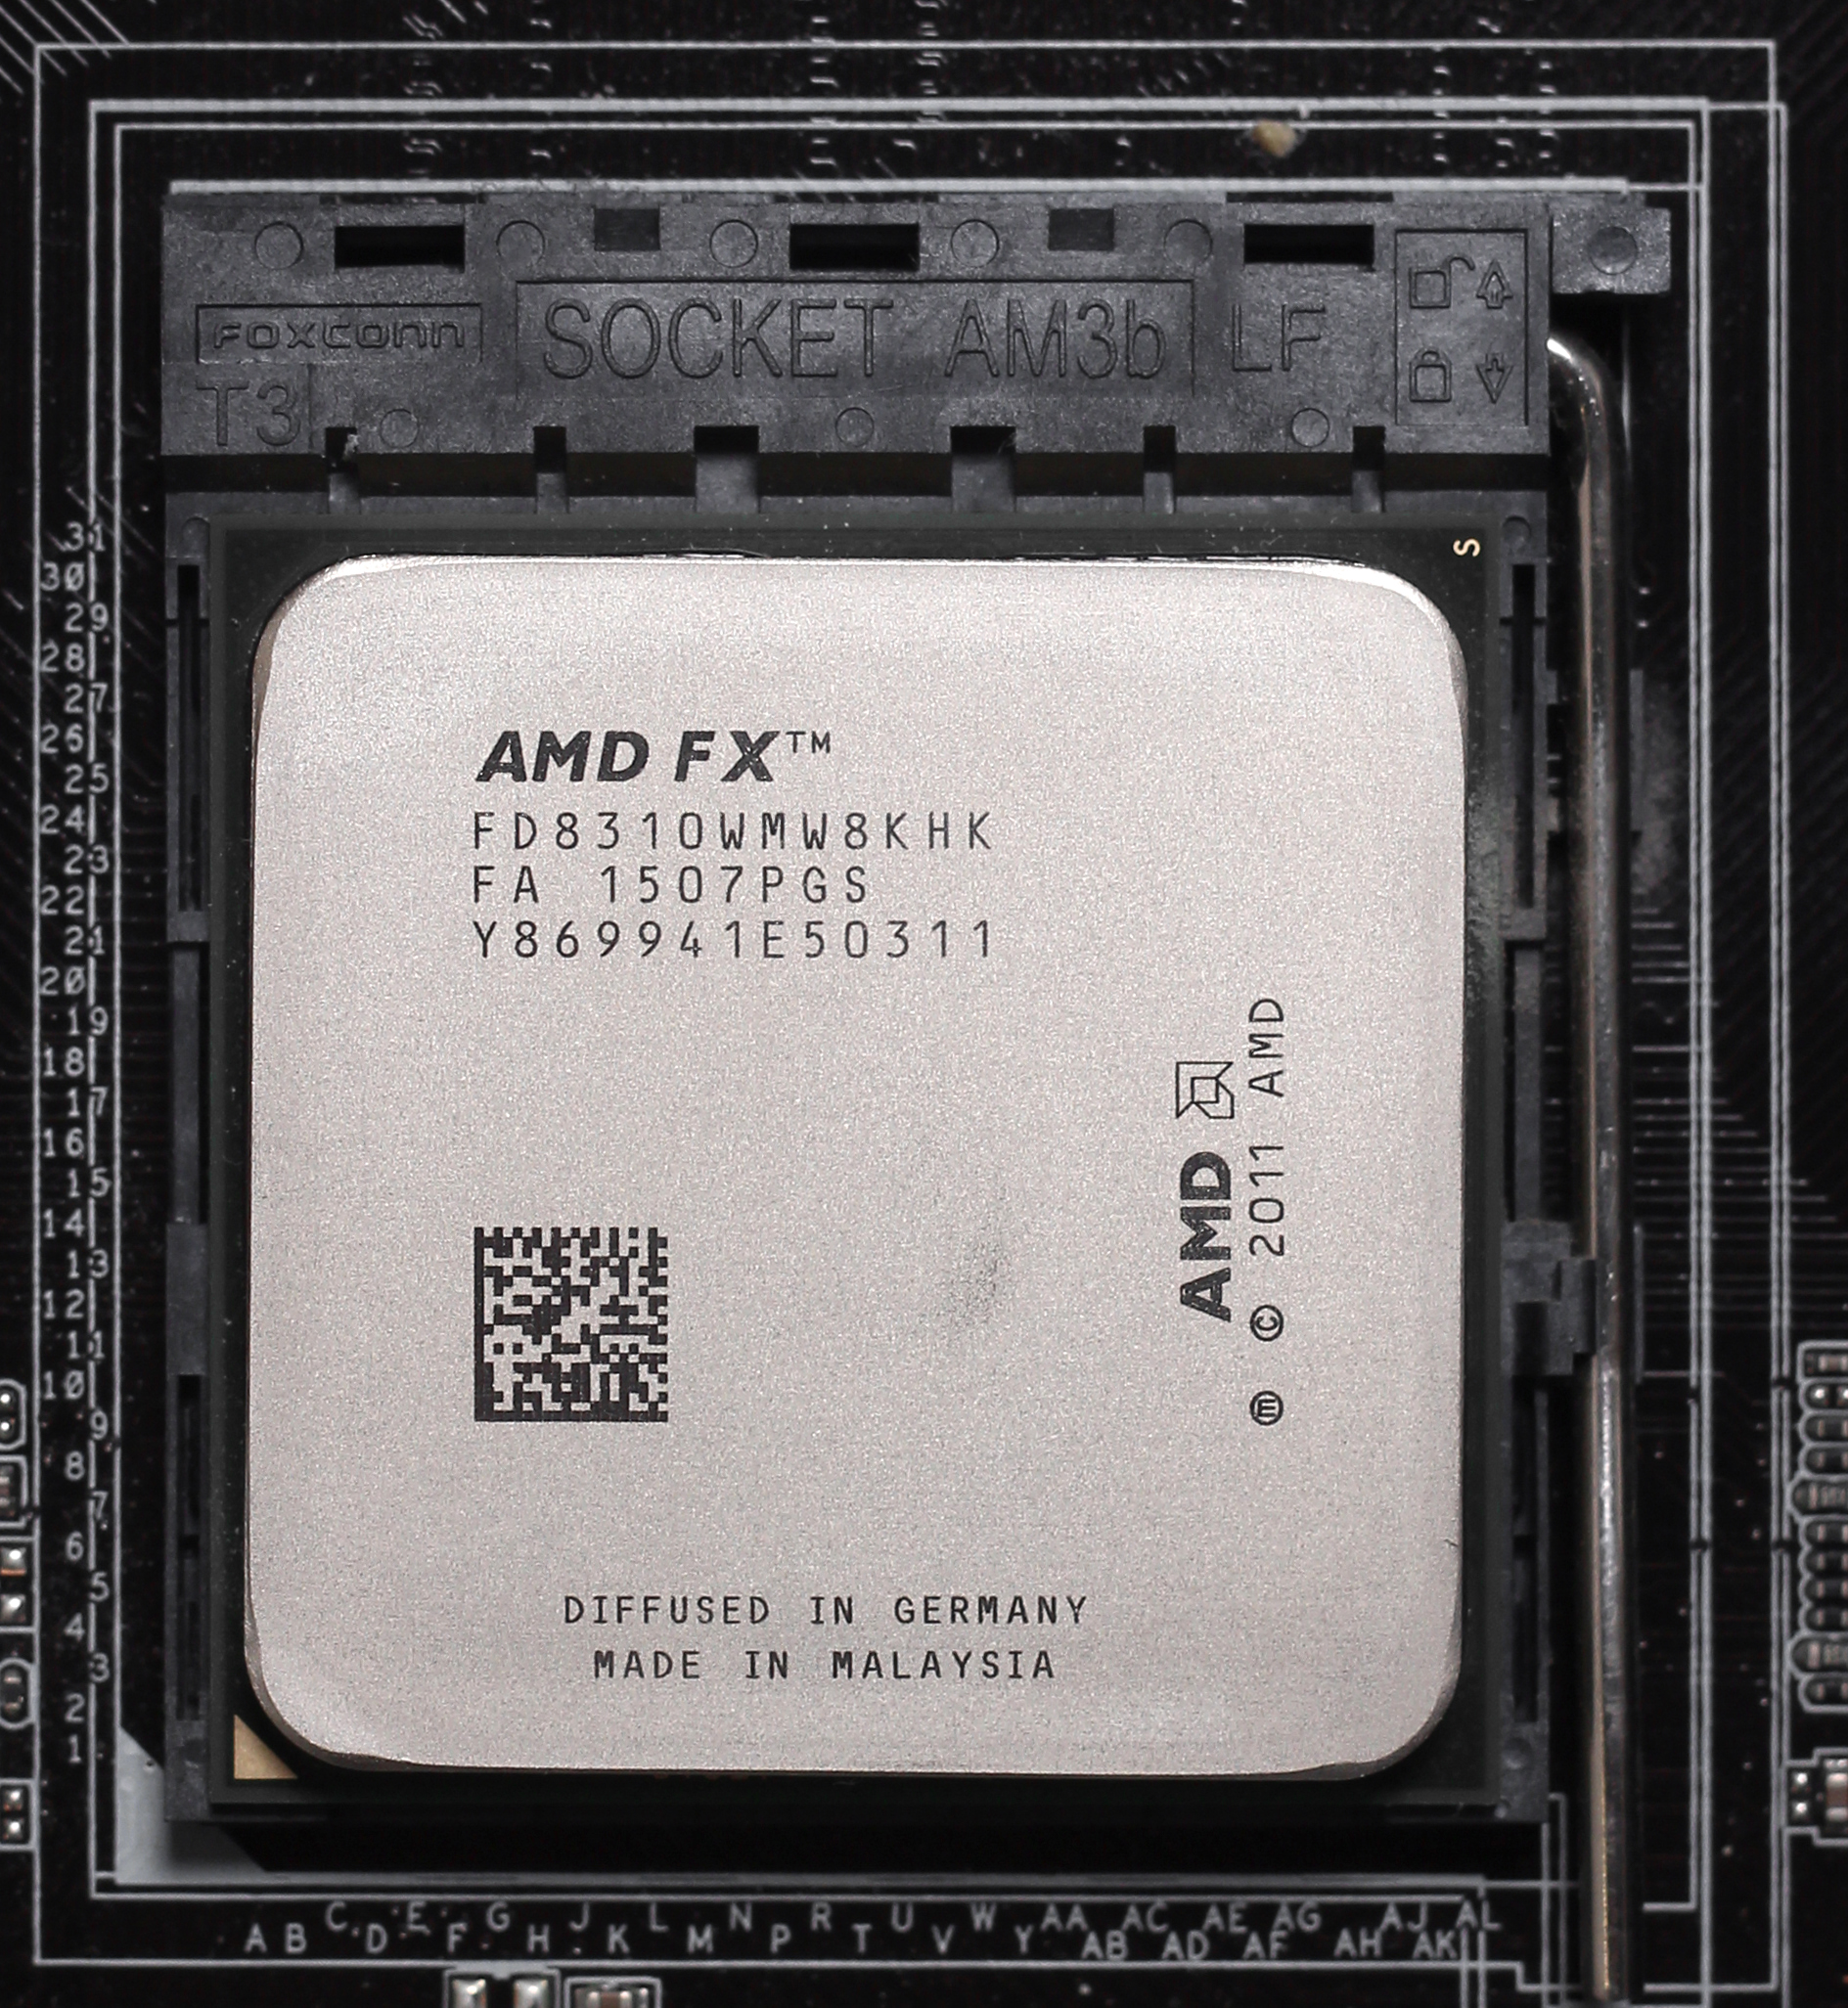 AMD FX - Wikipedia